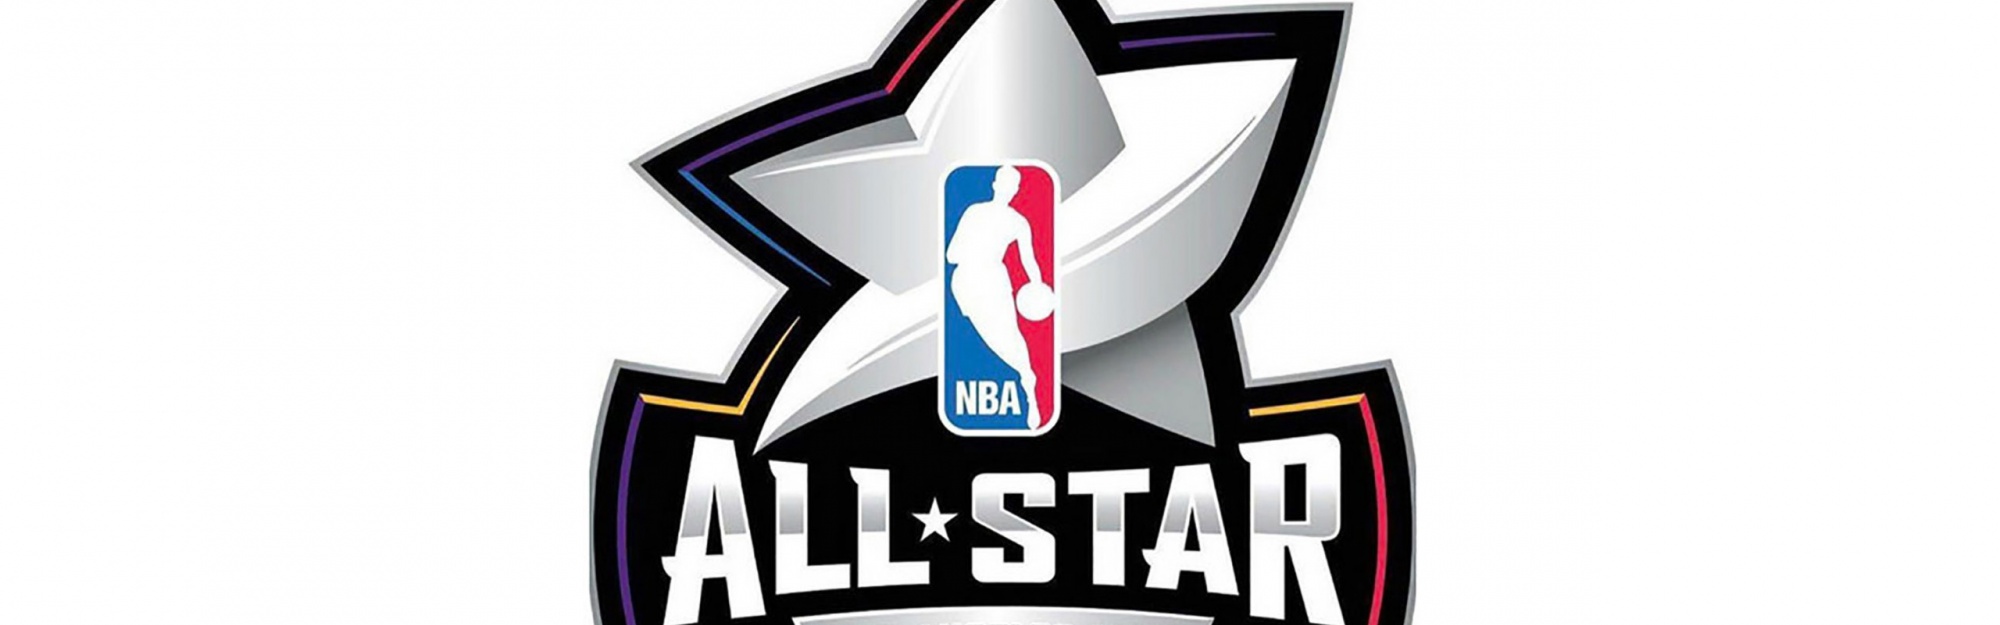 NBA All Star Logo Los Angeles 2018